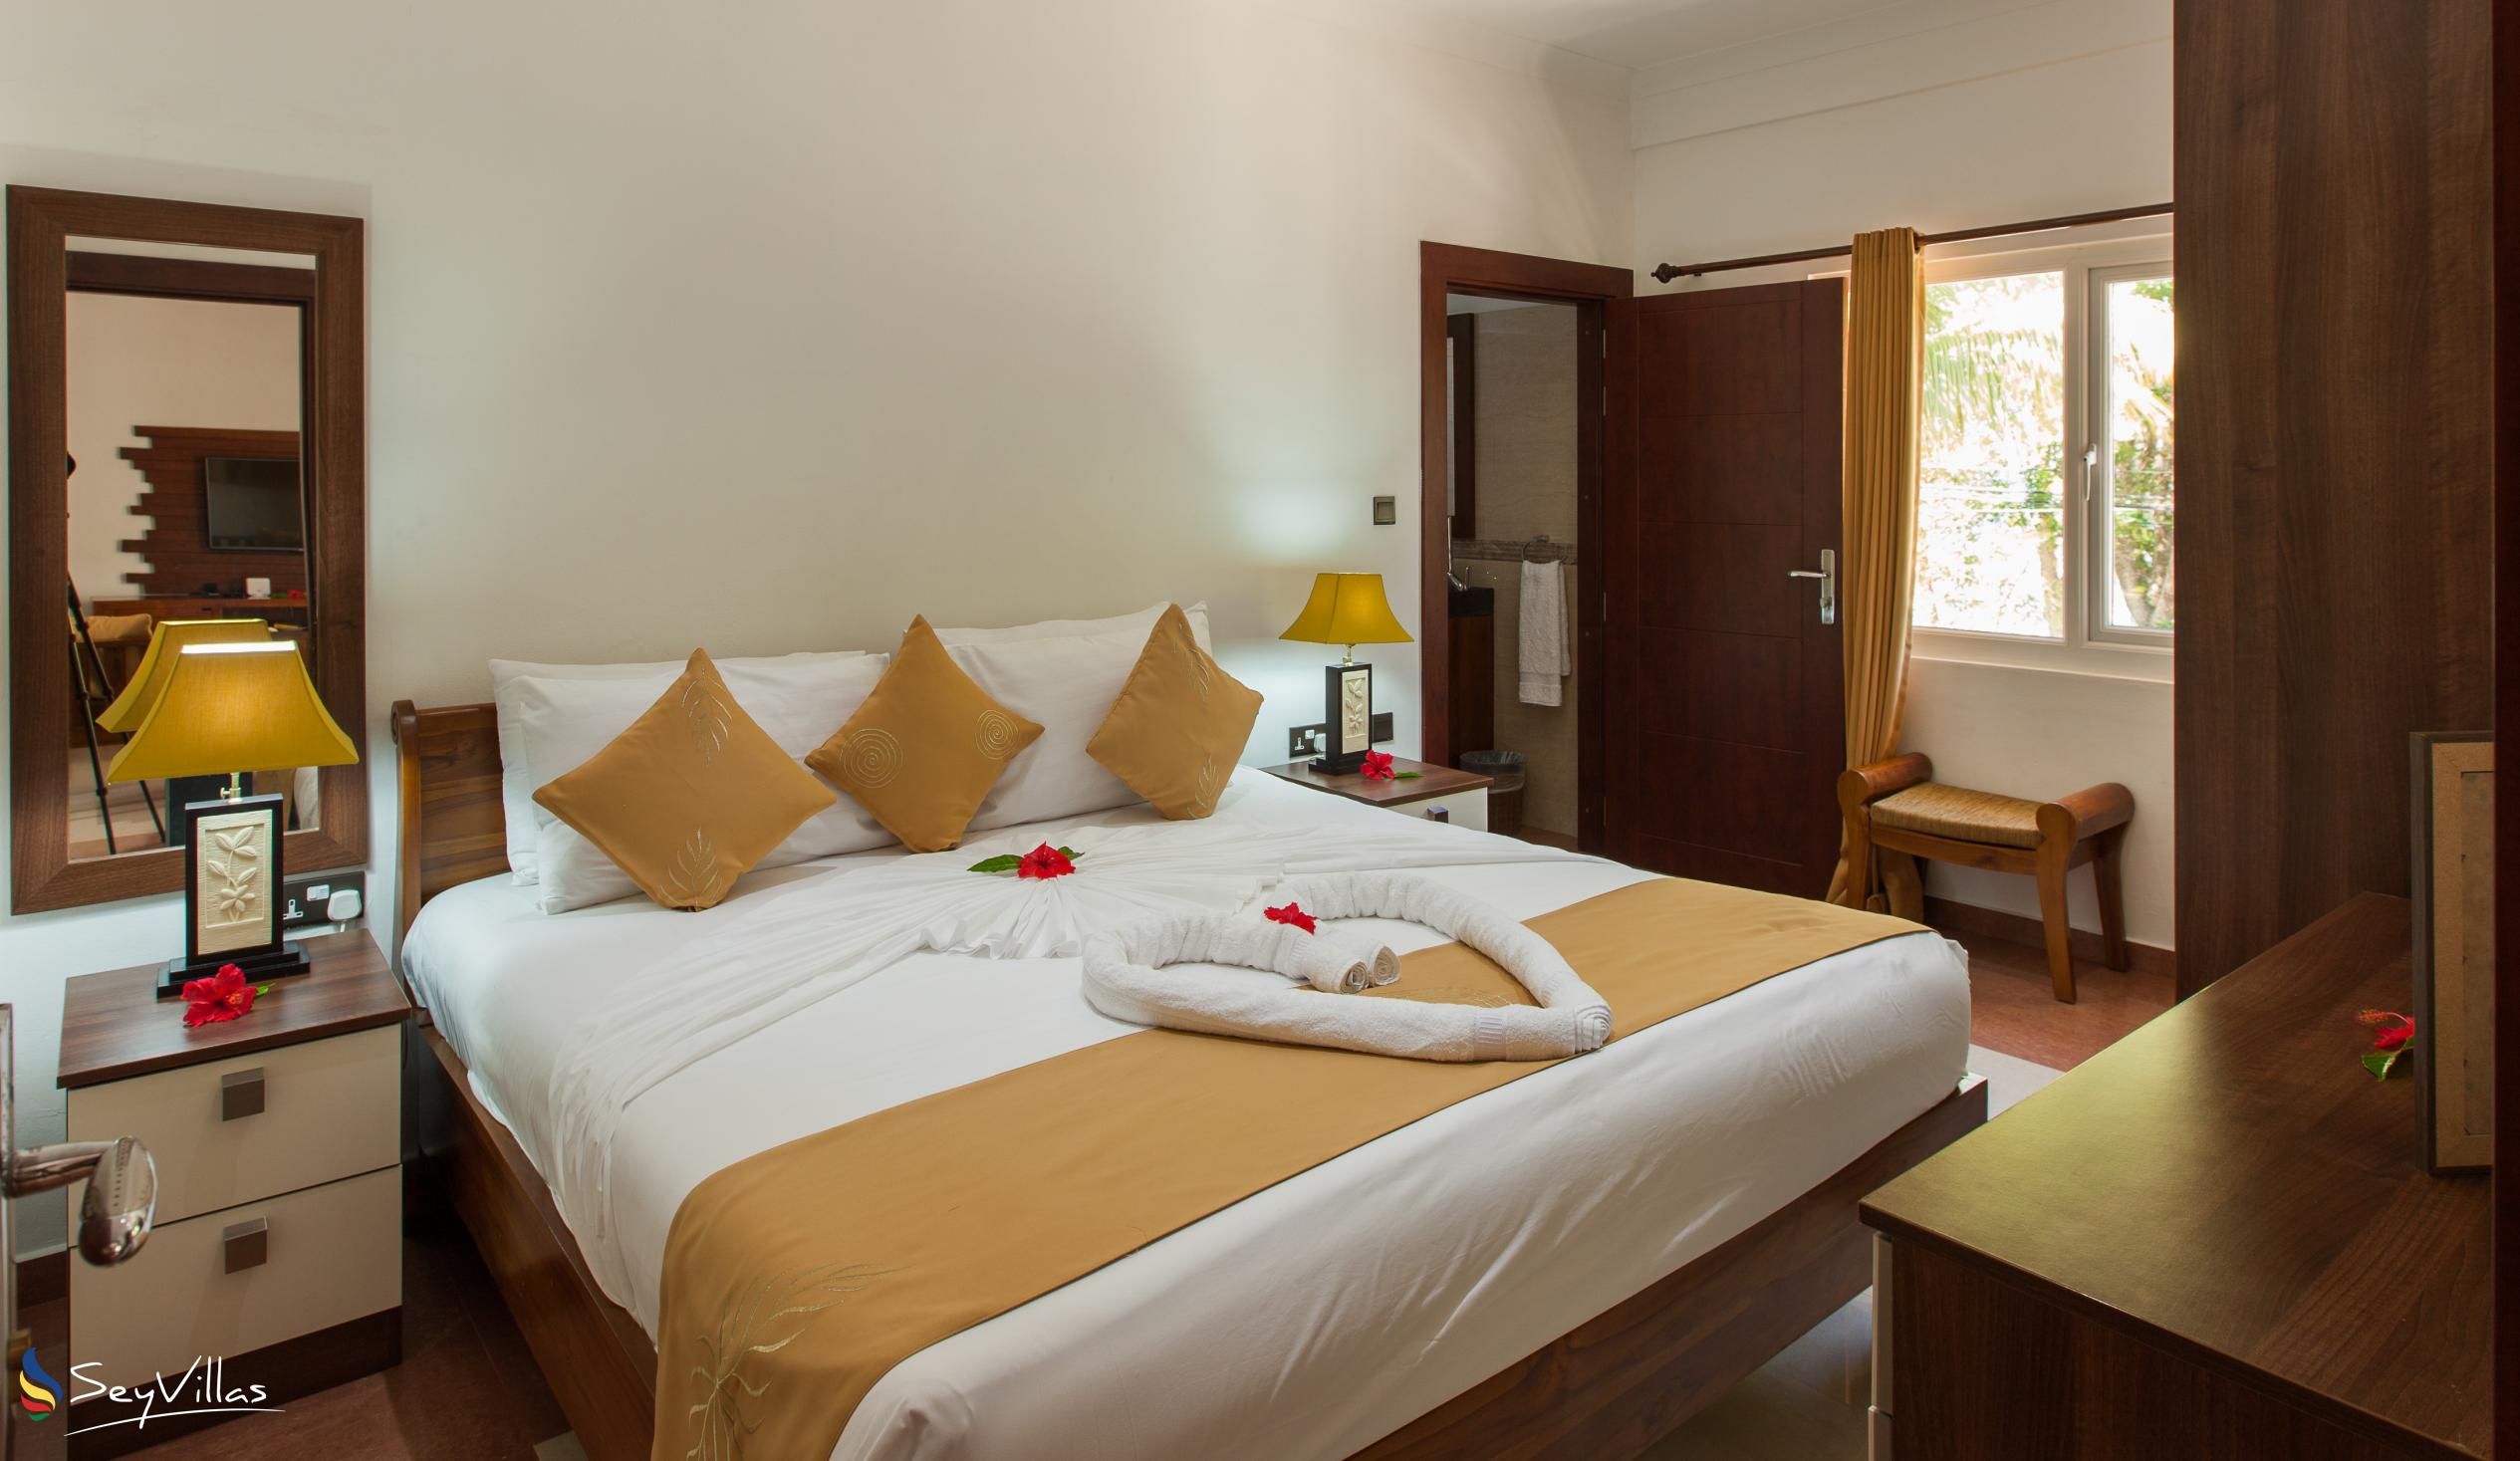 Photo 101: YASAD Luxury Beach Residence - 3-Bedroom Apartment First Floor - Praslin (Seychelles)